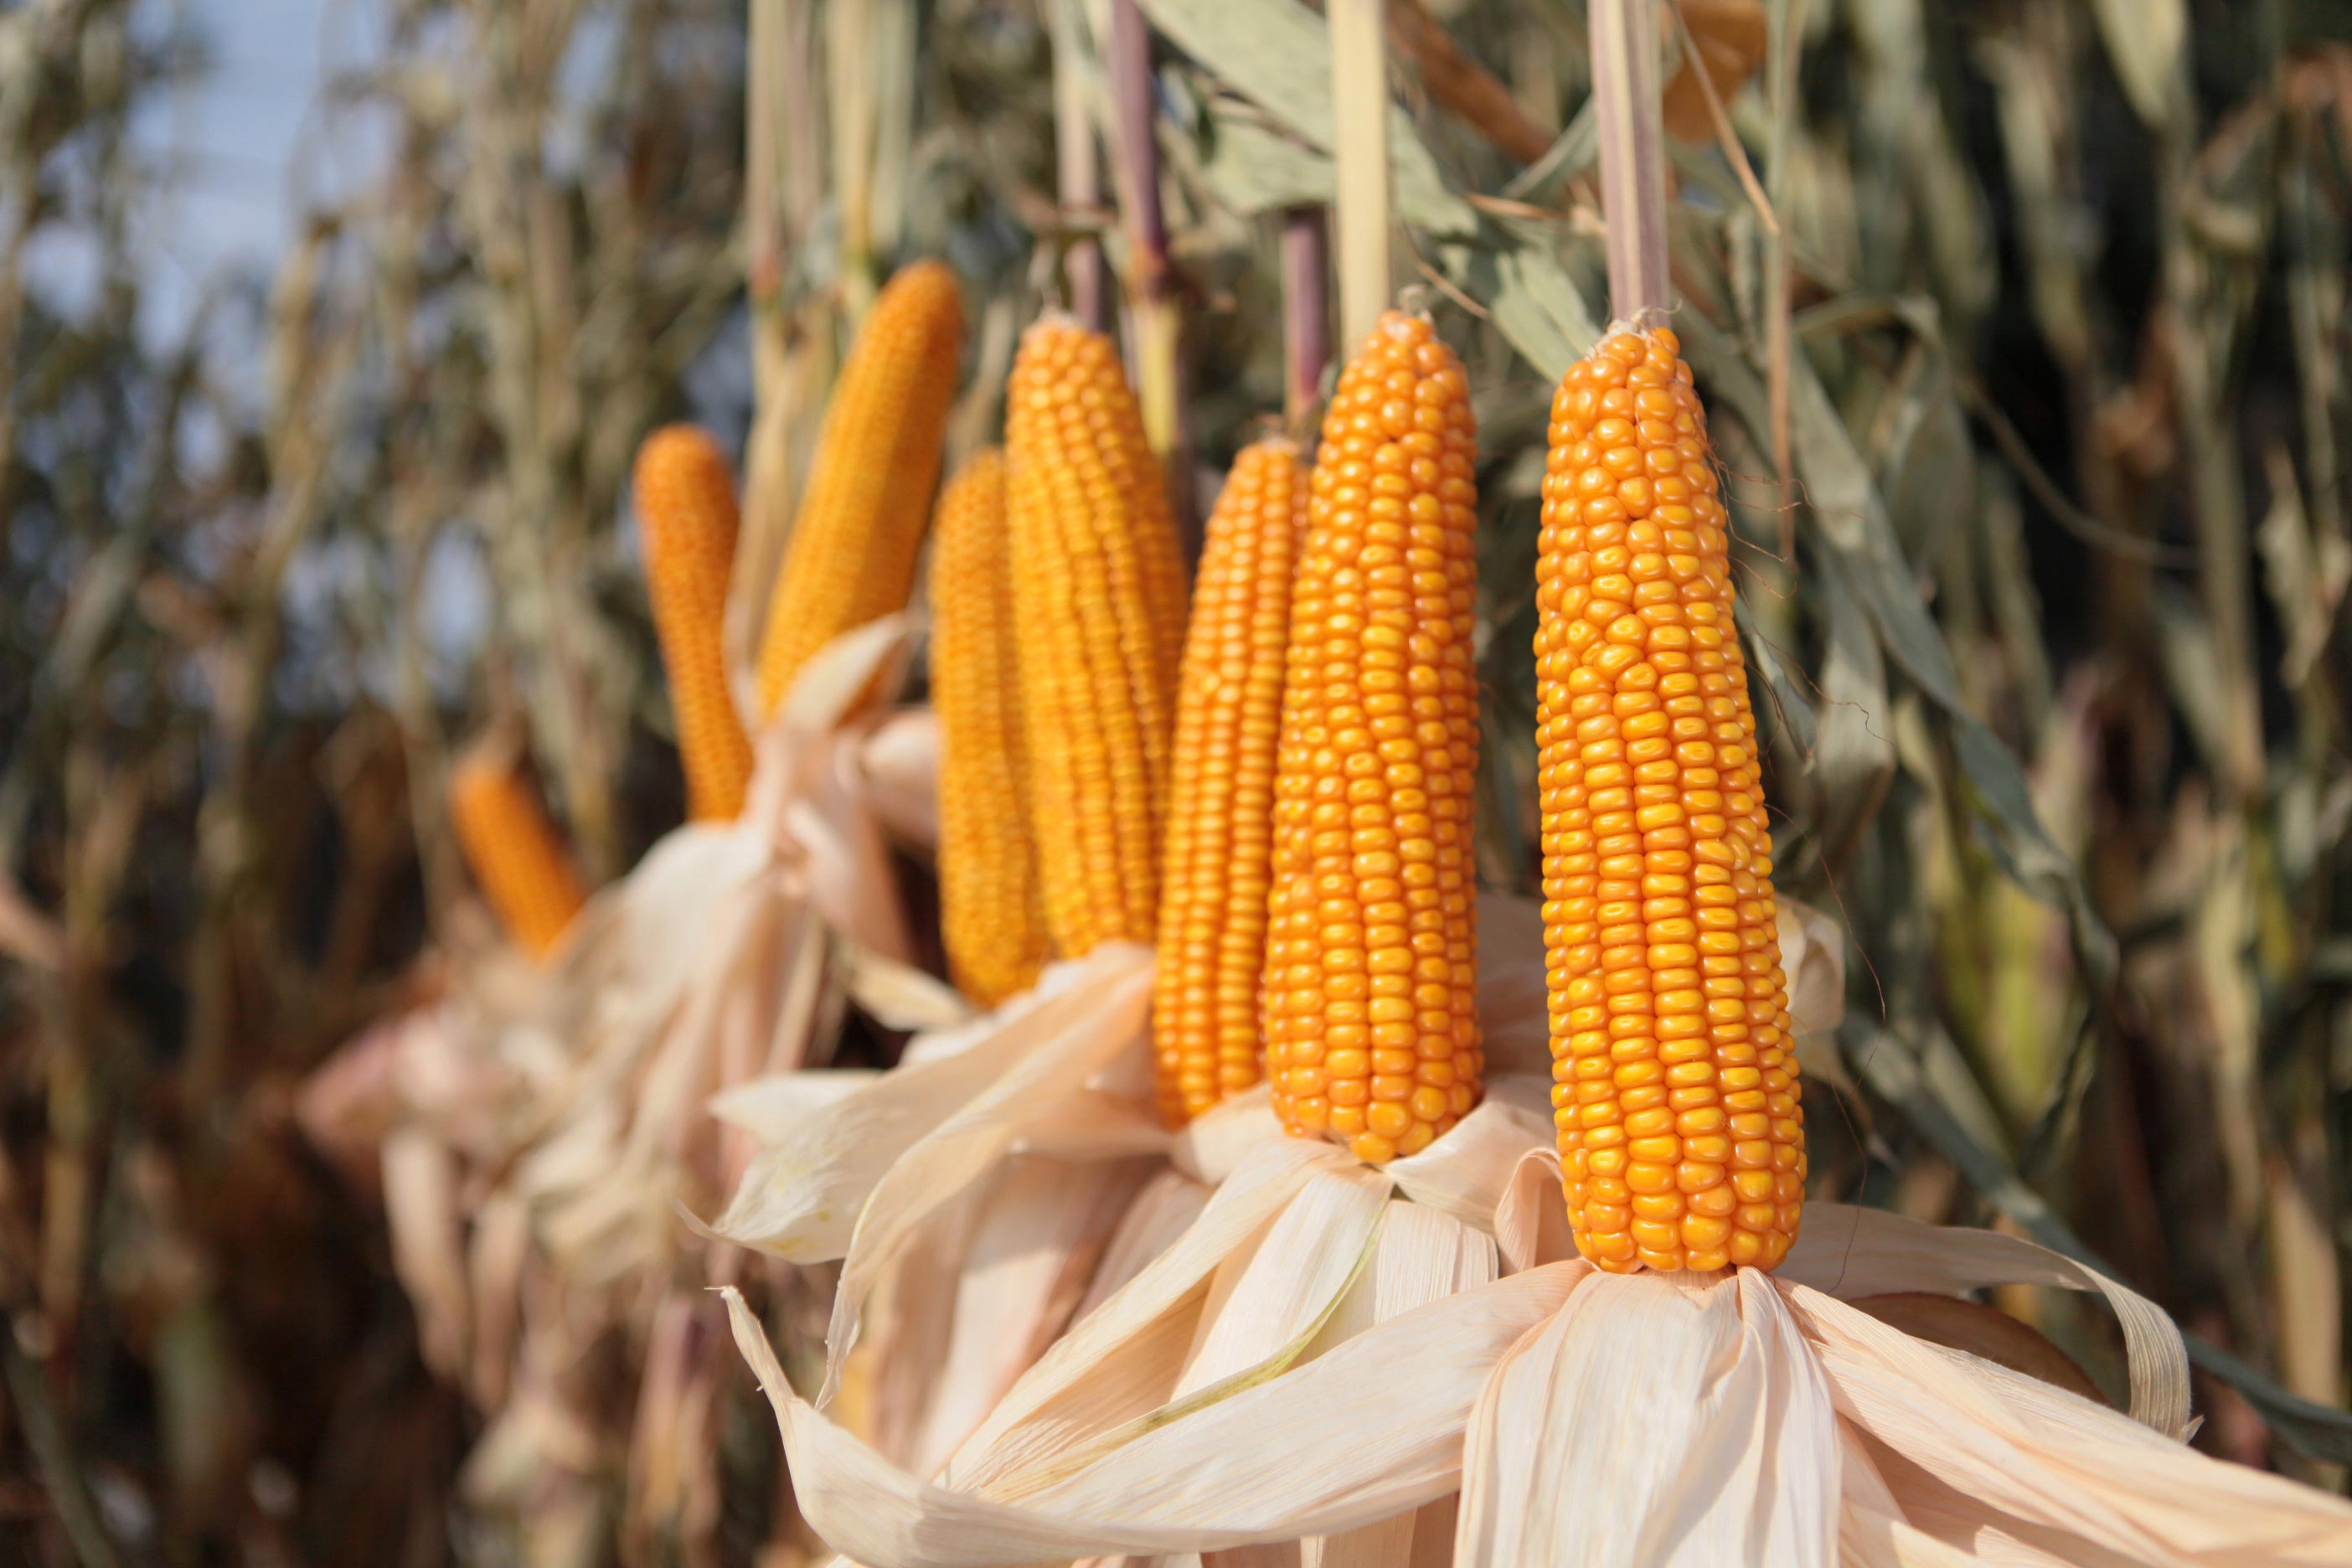 KWS KASHMIR takes the lead on the grain corn market